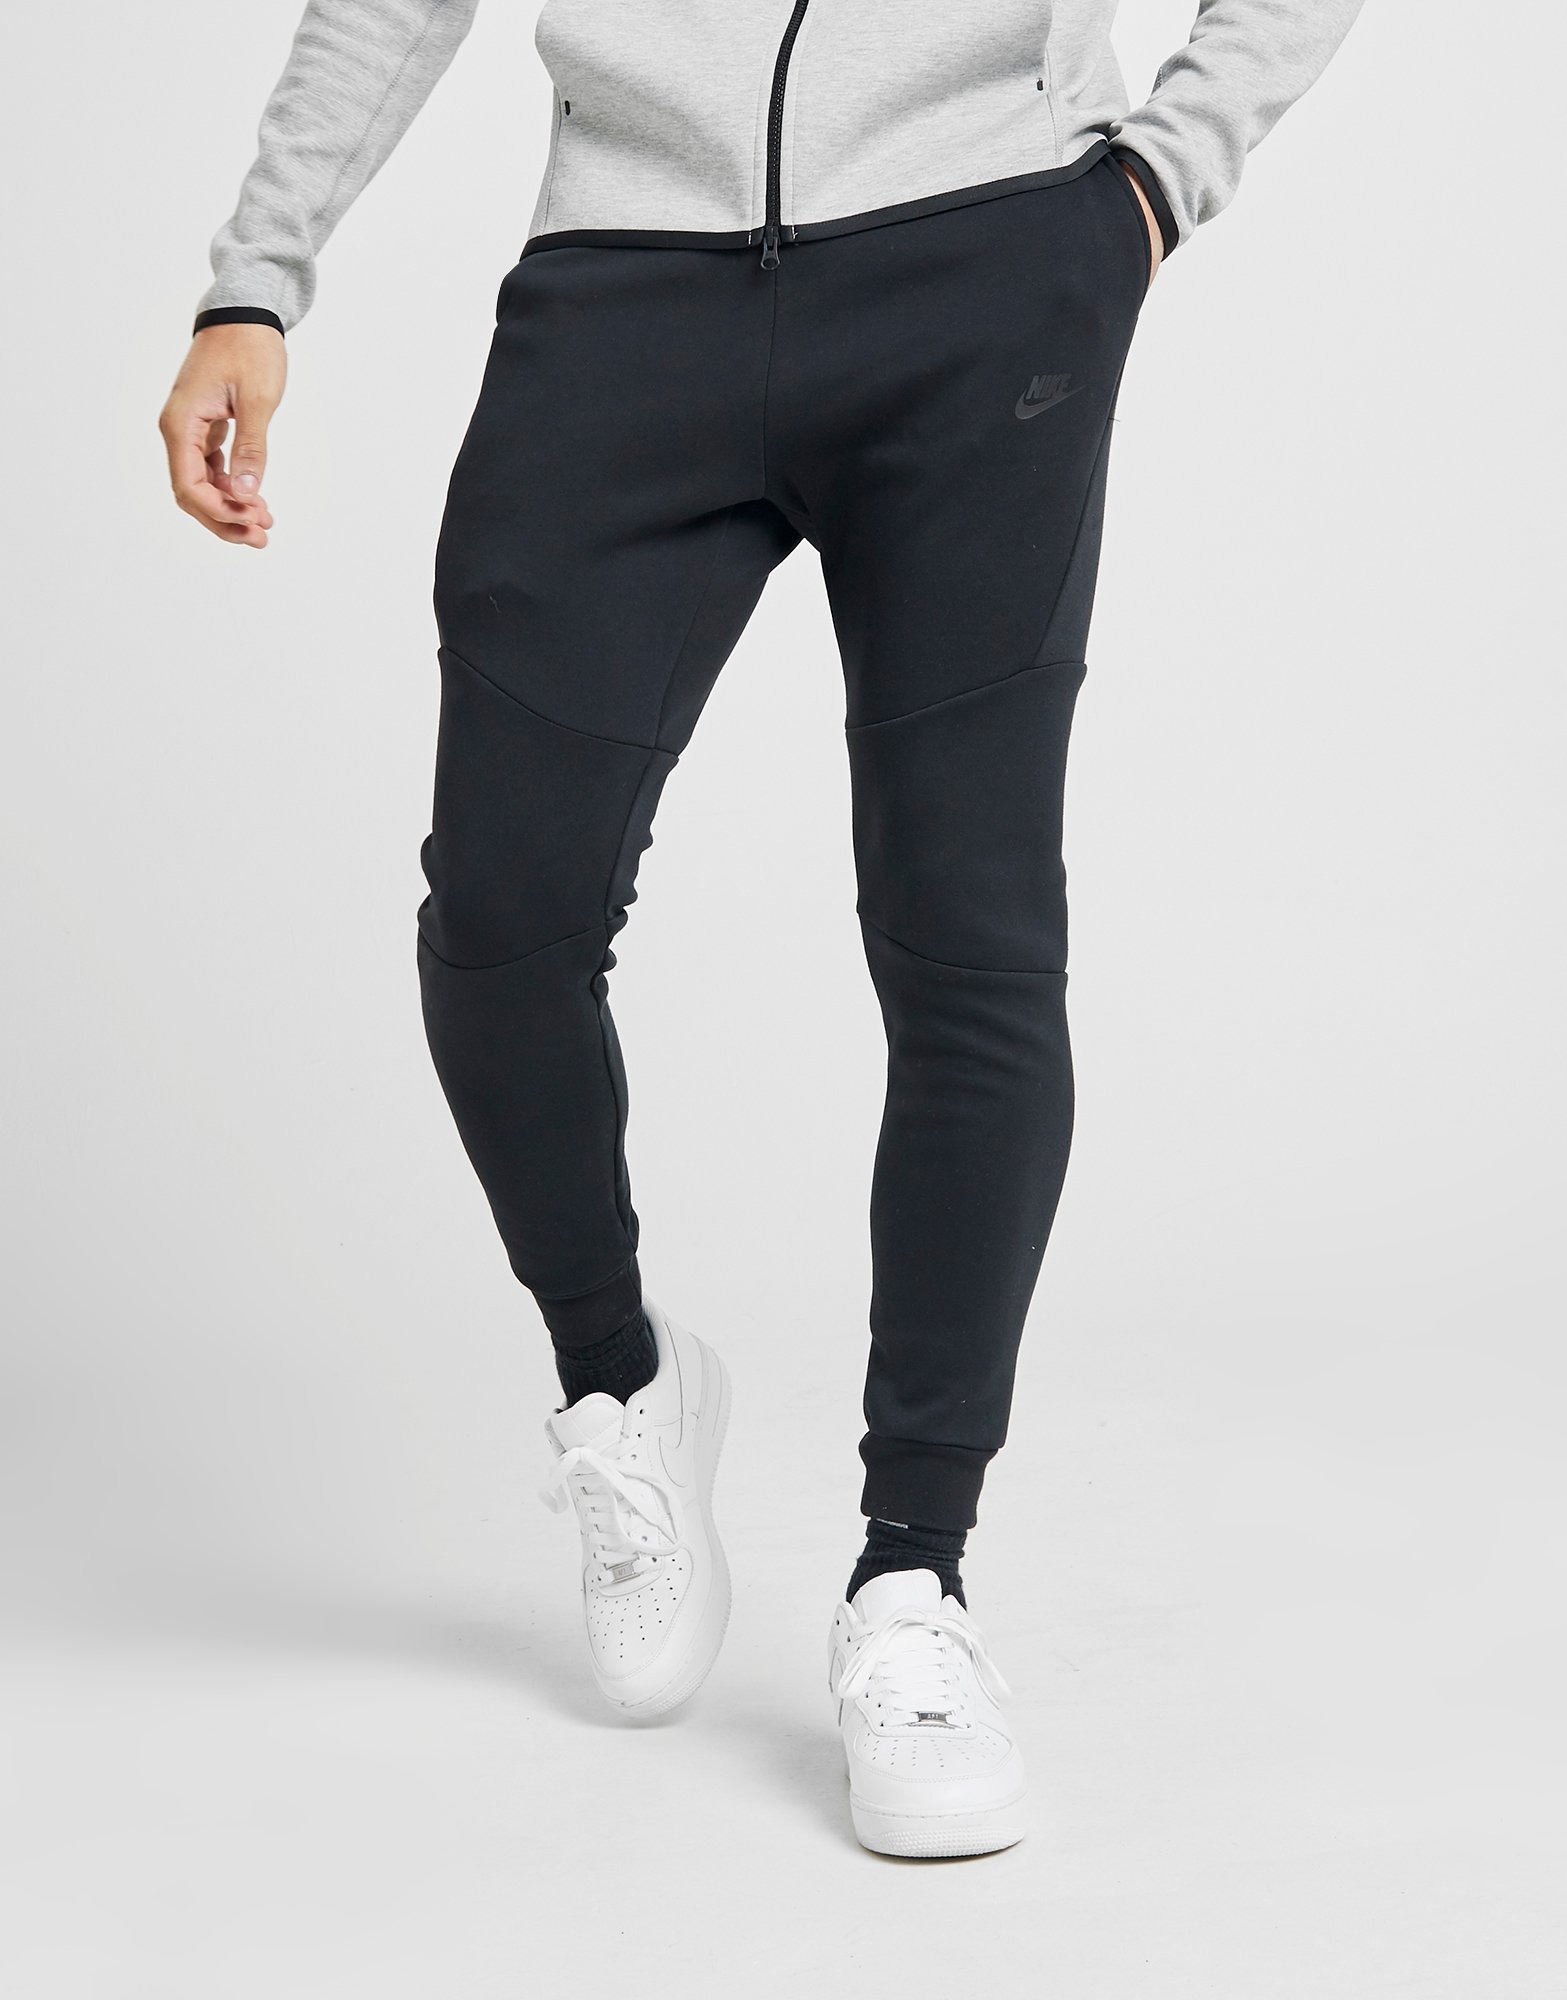 Acherter Noir Nike Pantalon De Survetement Tech Fleece Jd Sports